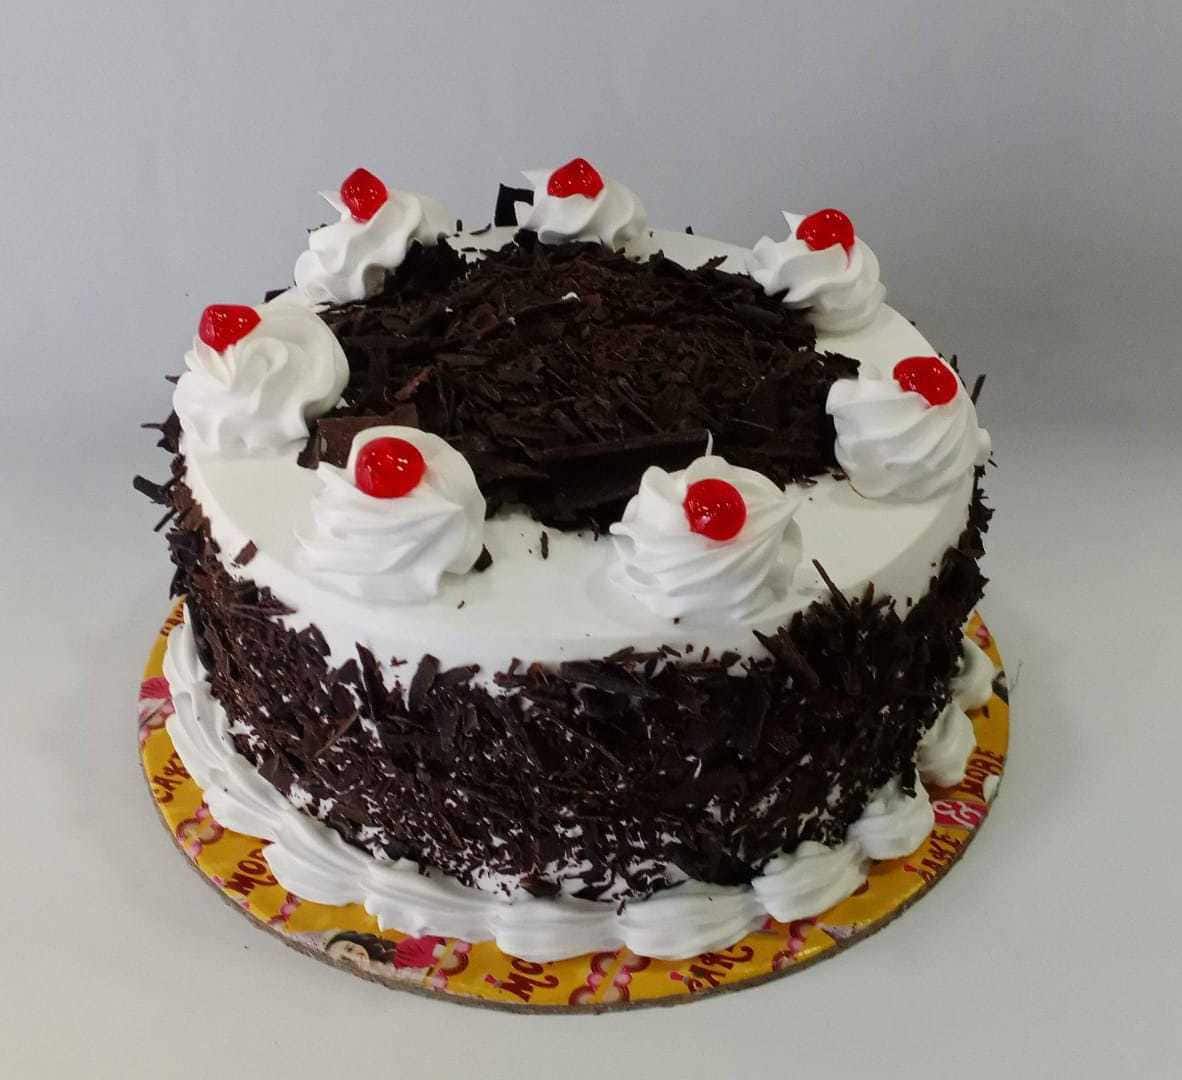 Details more than 233 zomato cake